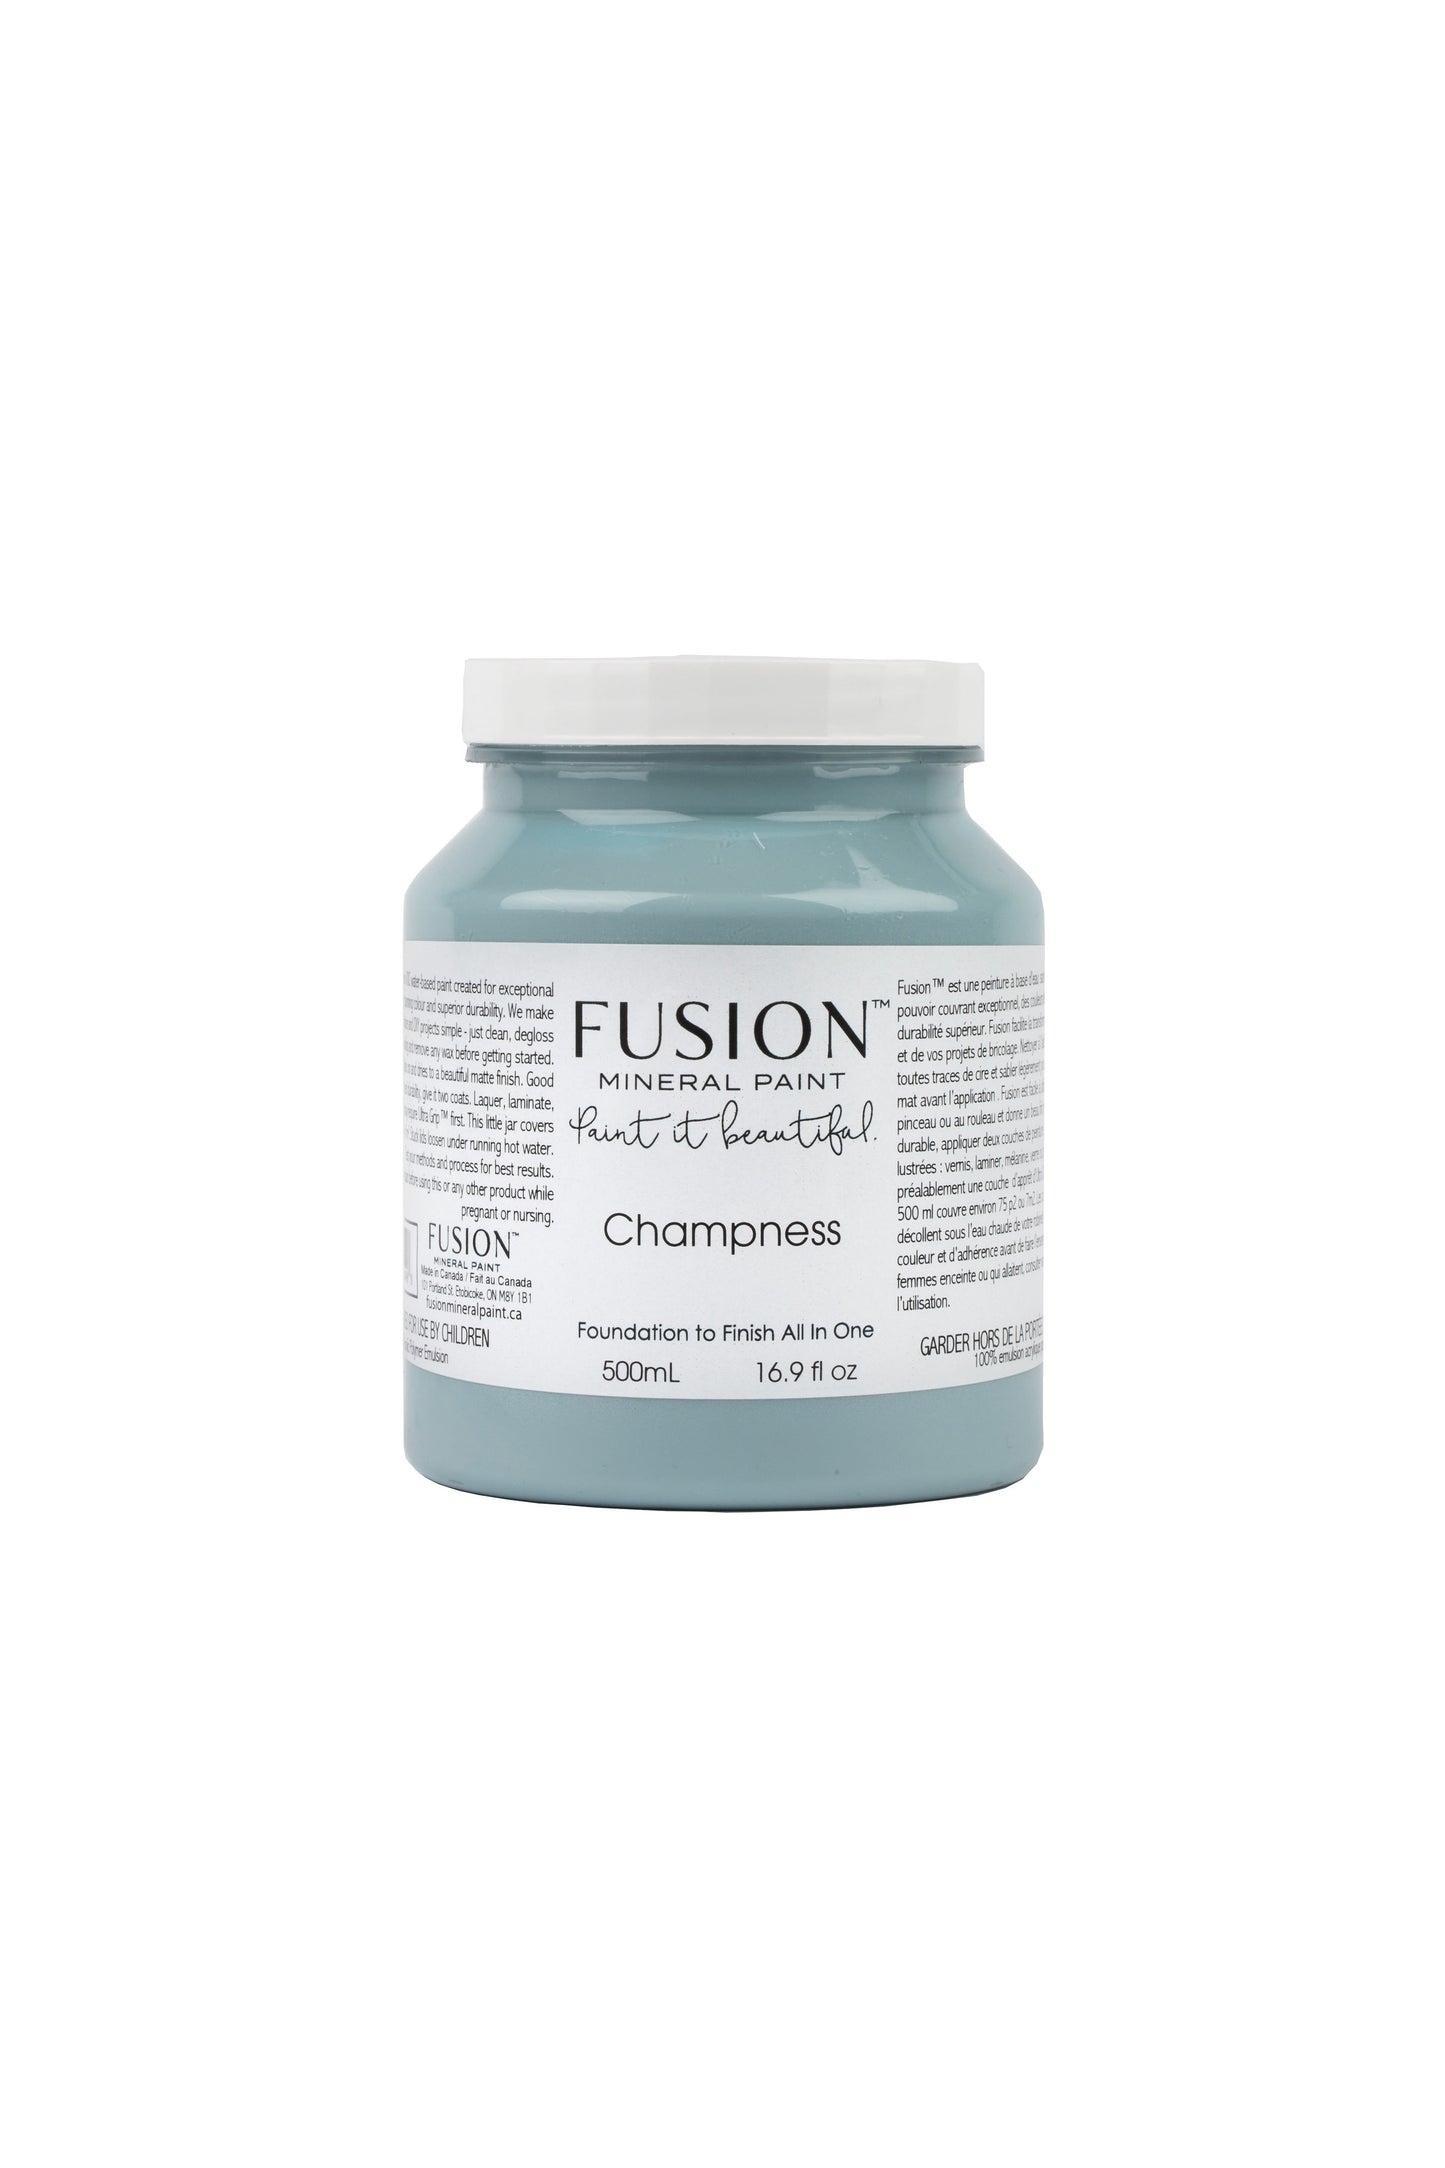 Champness Fusion Mineral Paint, Light Blue Paint Color | 500ml Pint Size